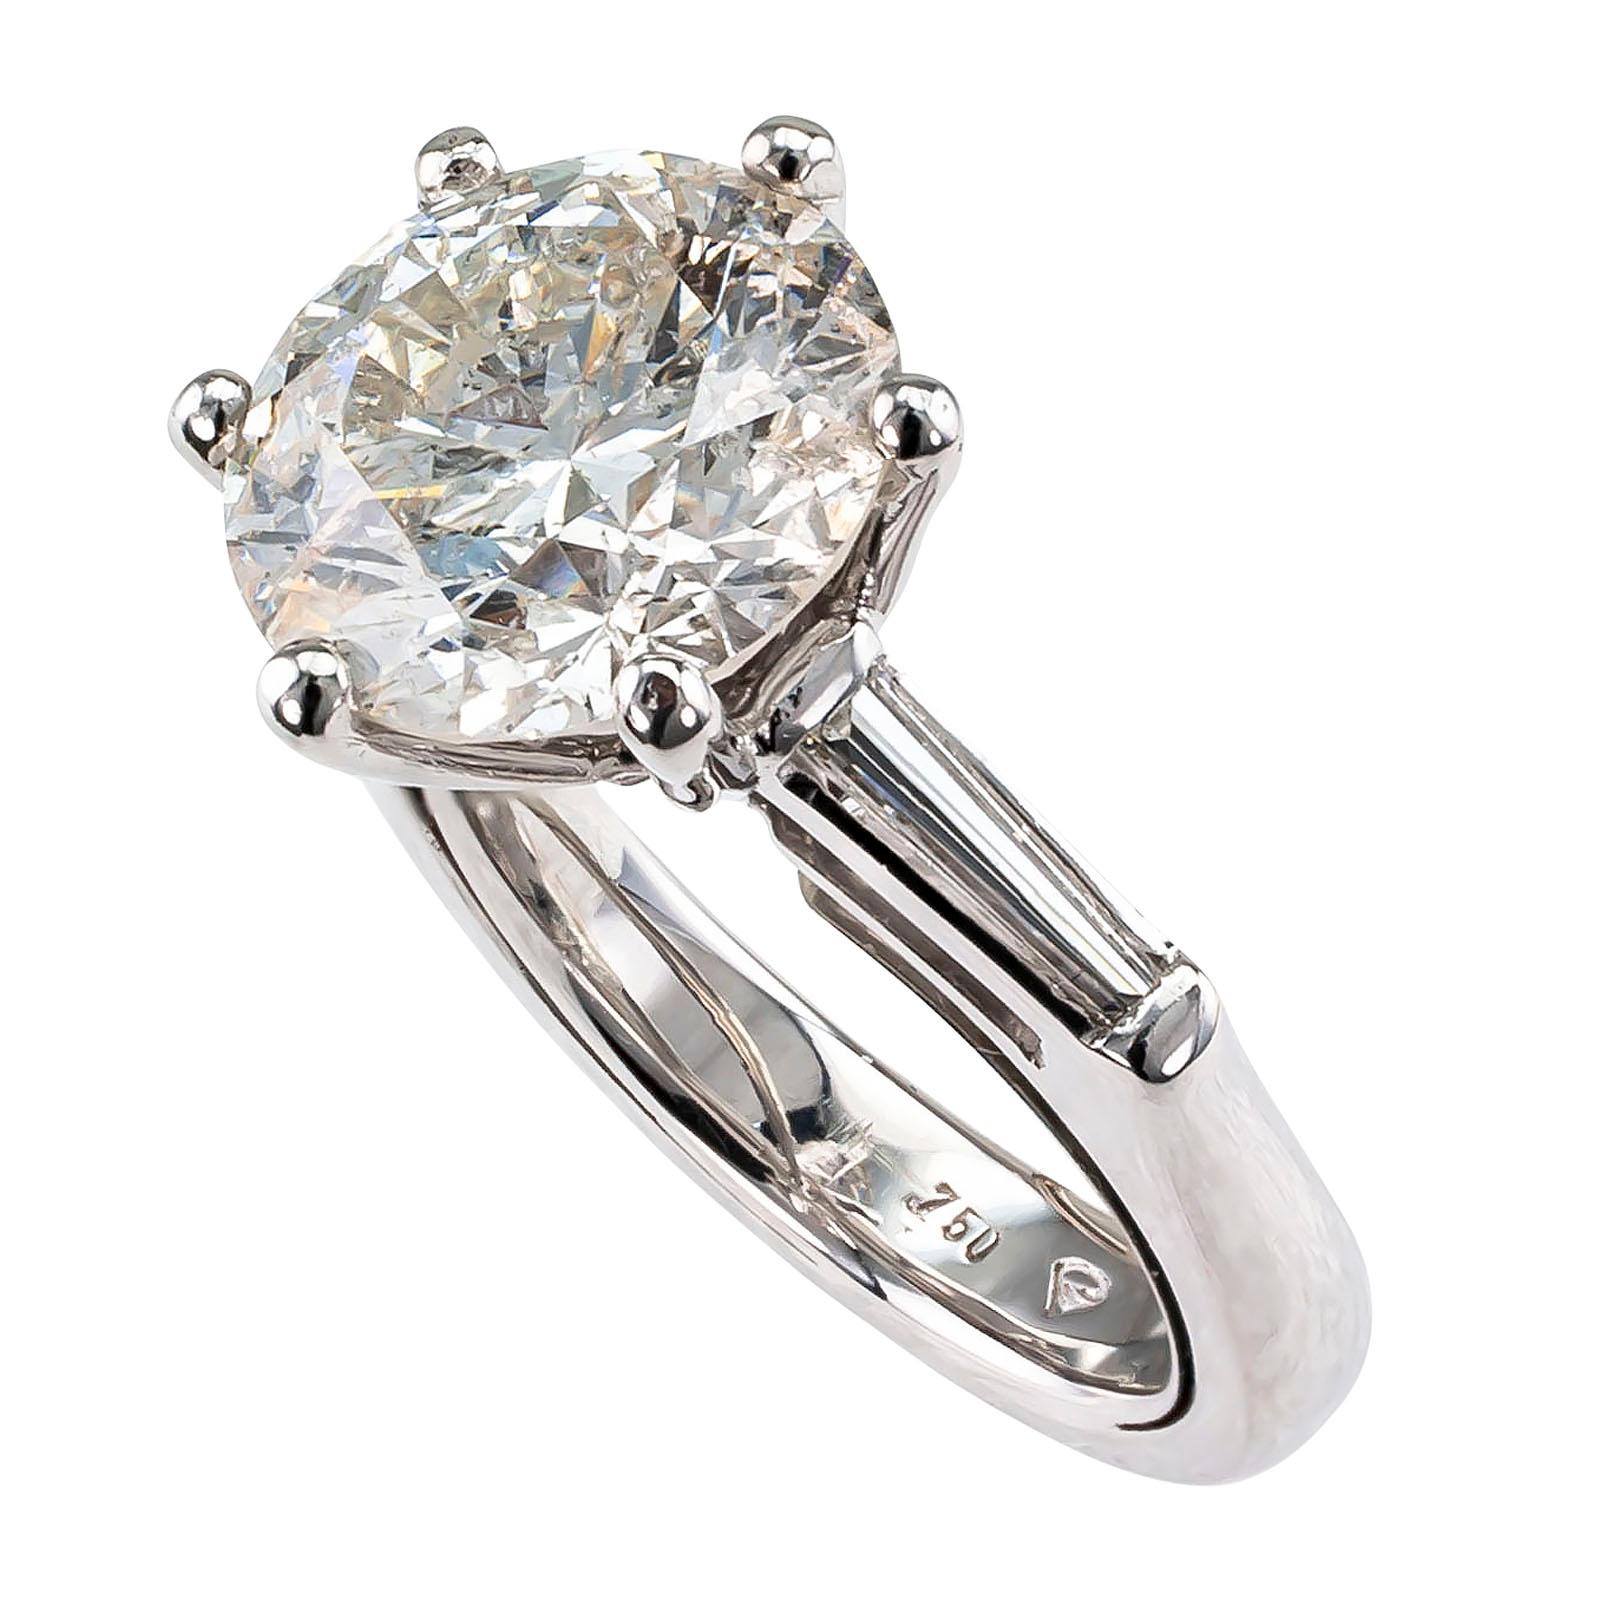 4.43 carat diamond ring